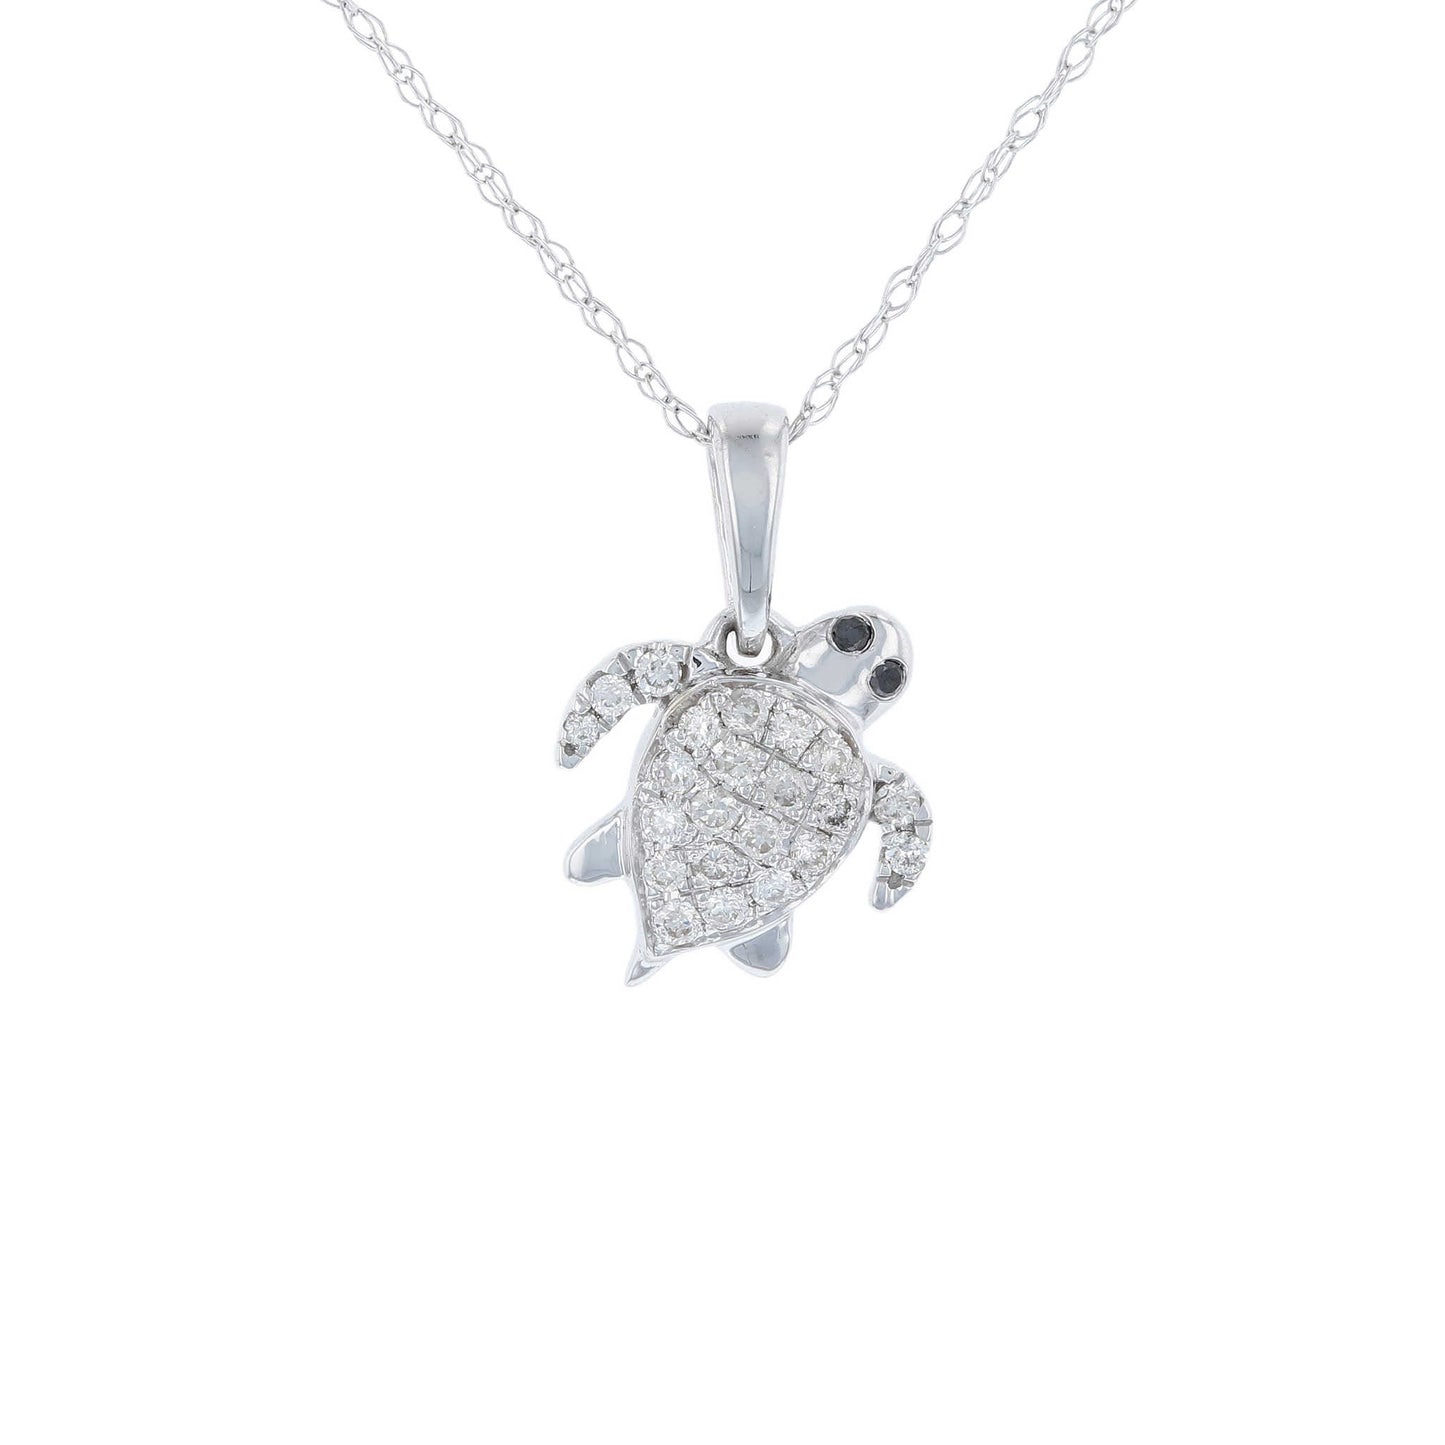 Black & White Diamond Turtle Necklace